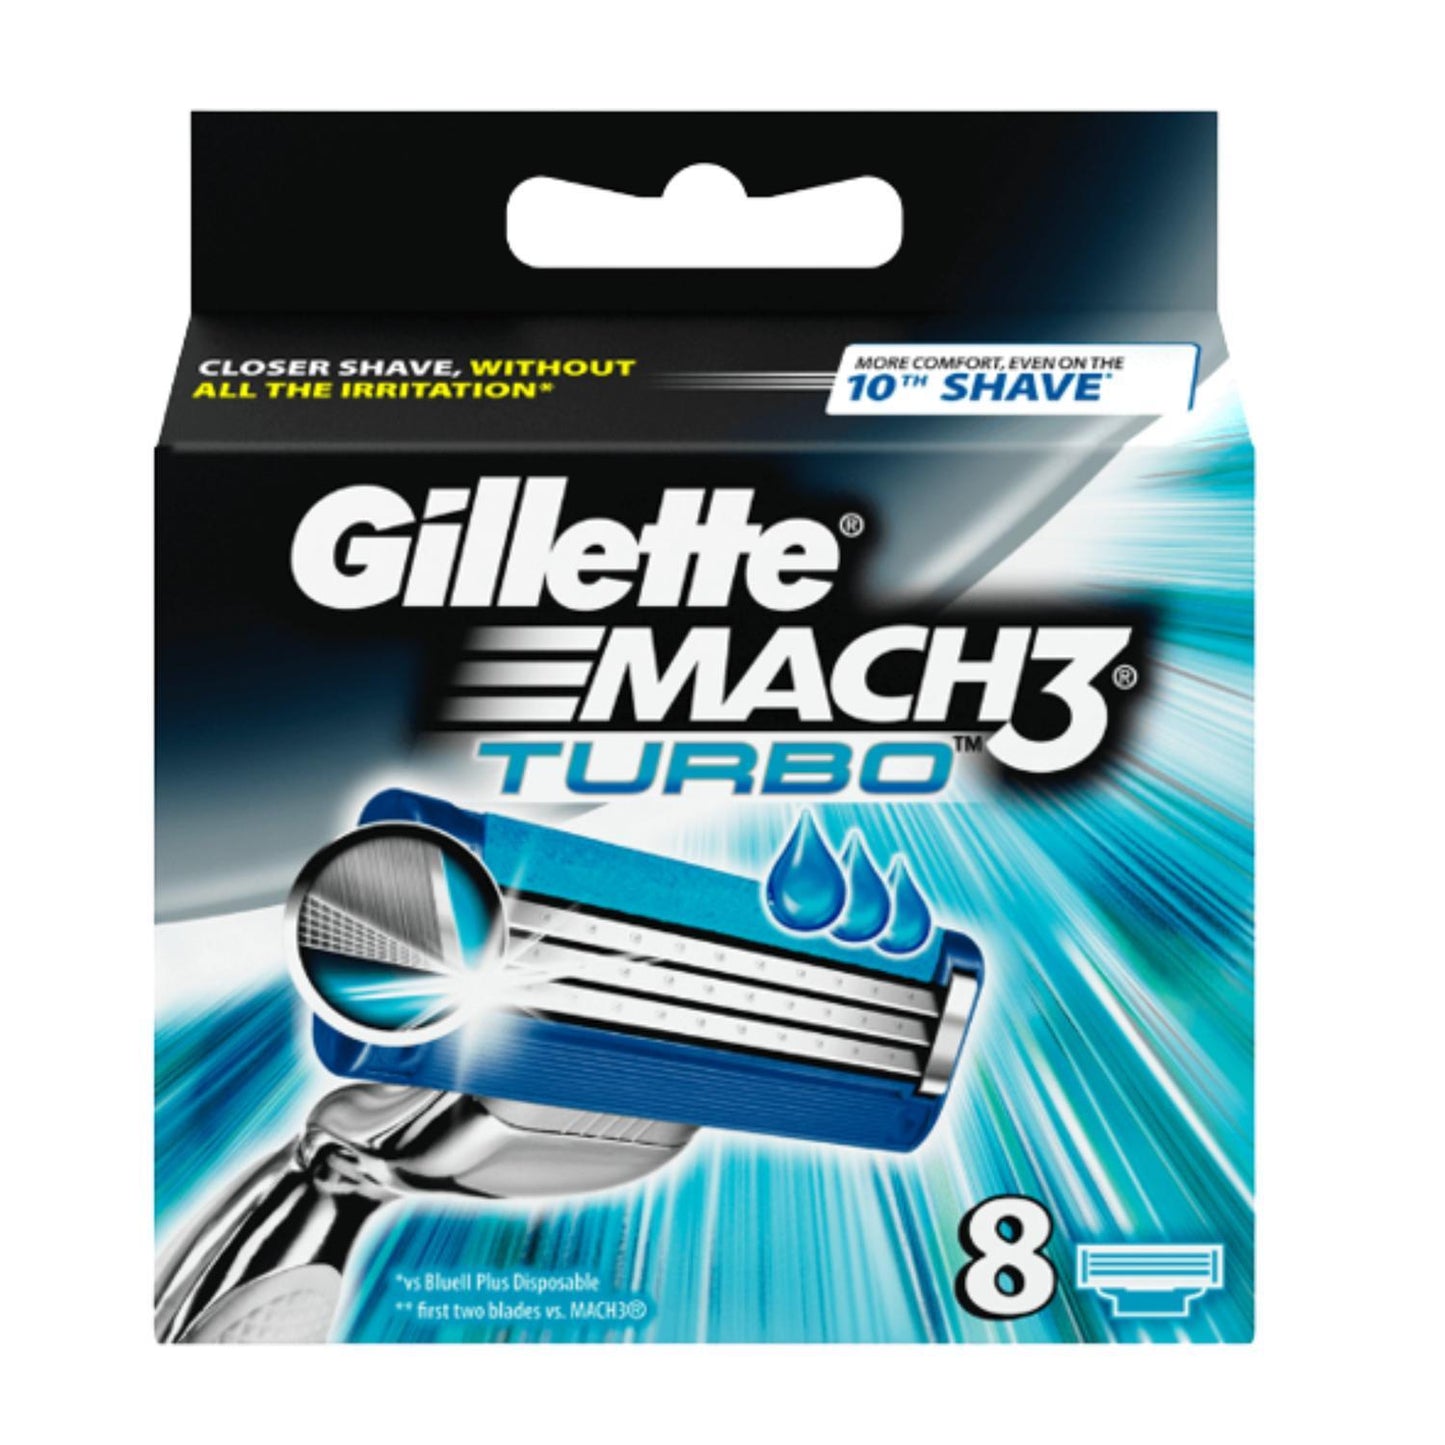 Gillette Mach 3 Turbo 8 pack